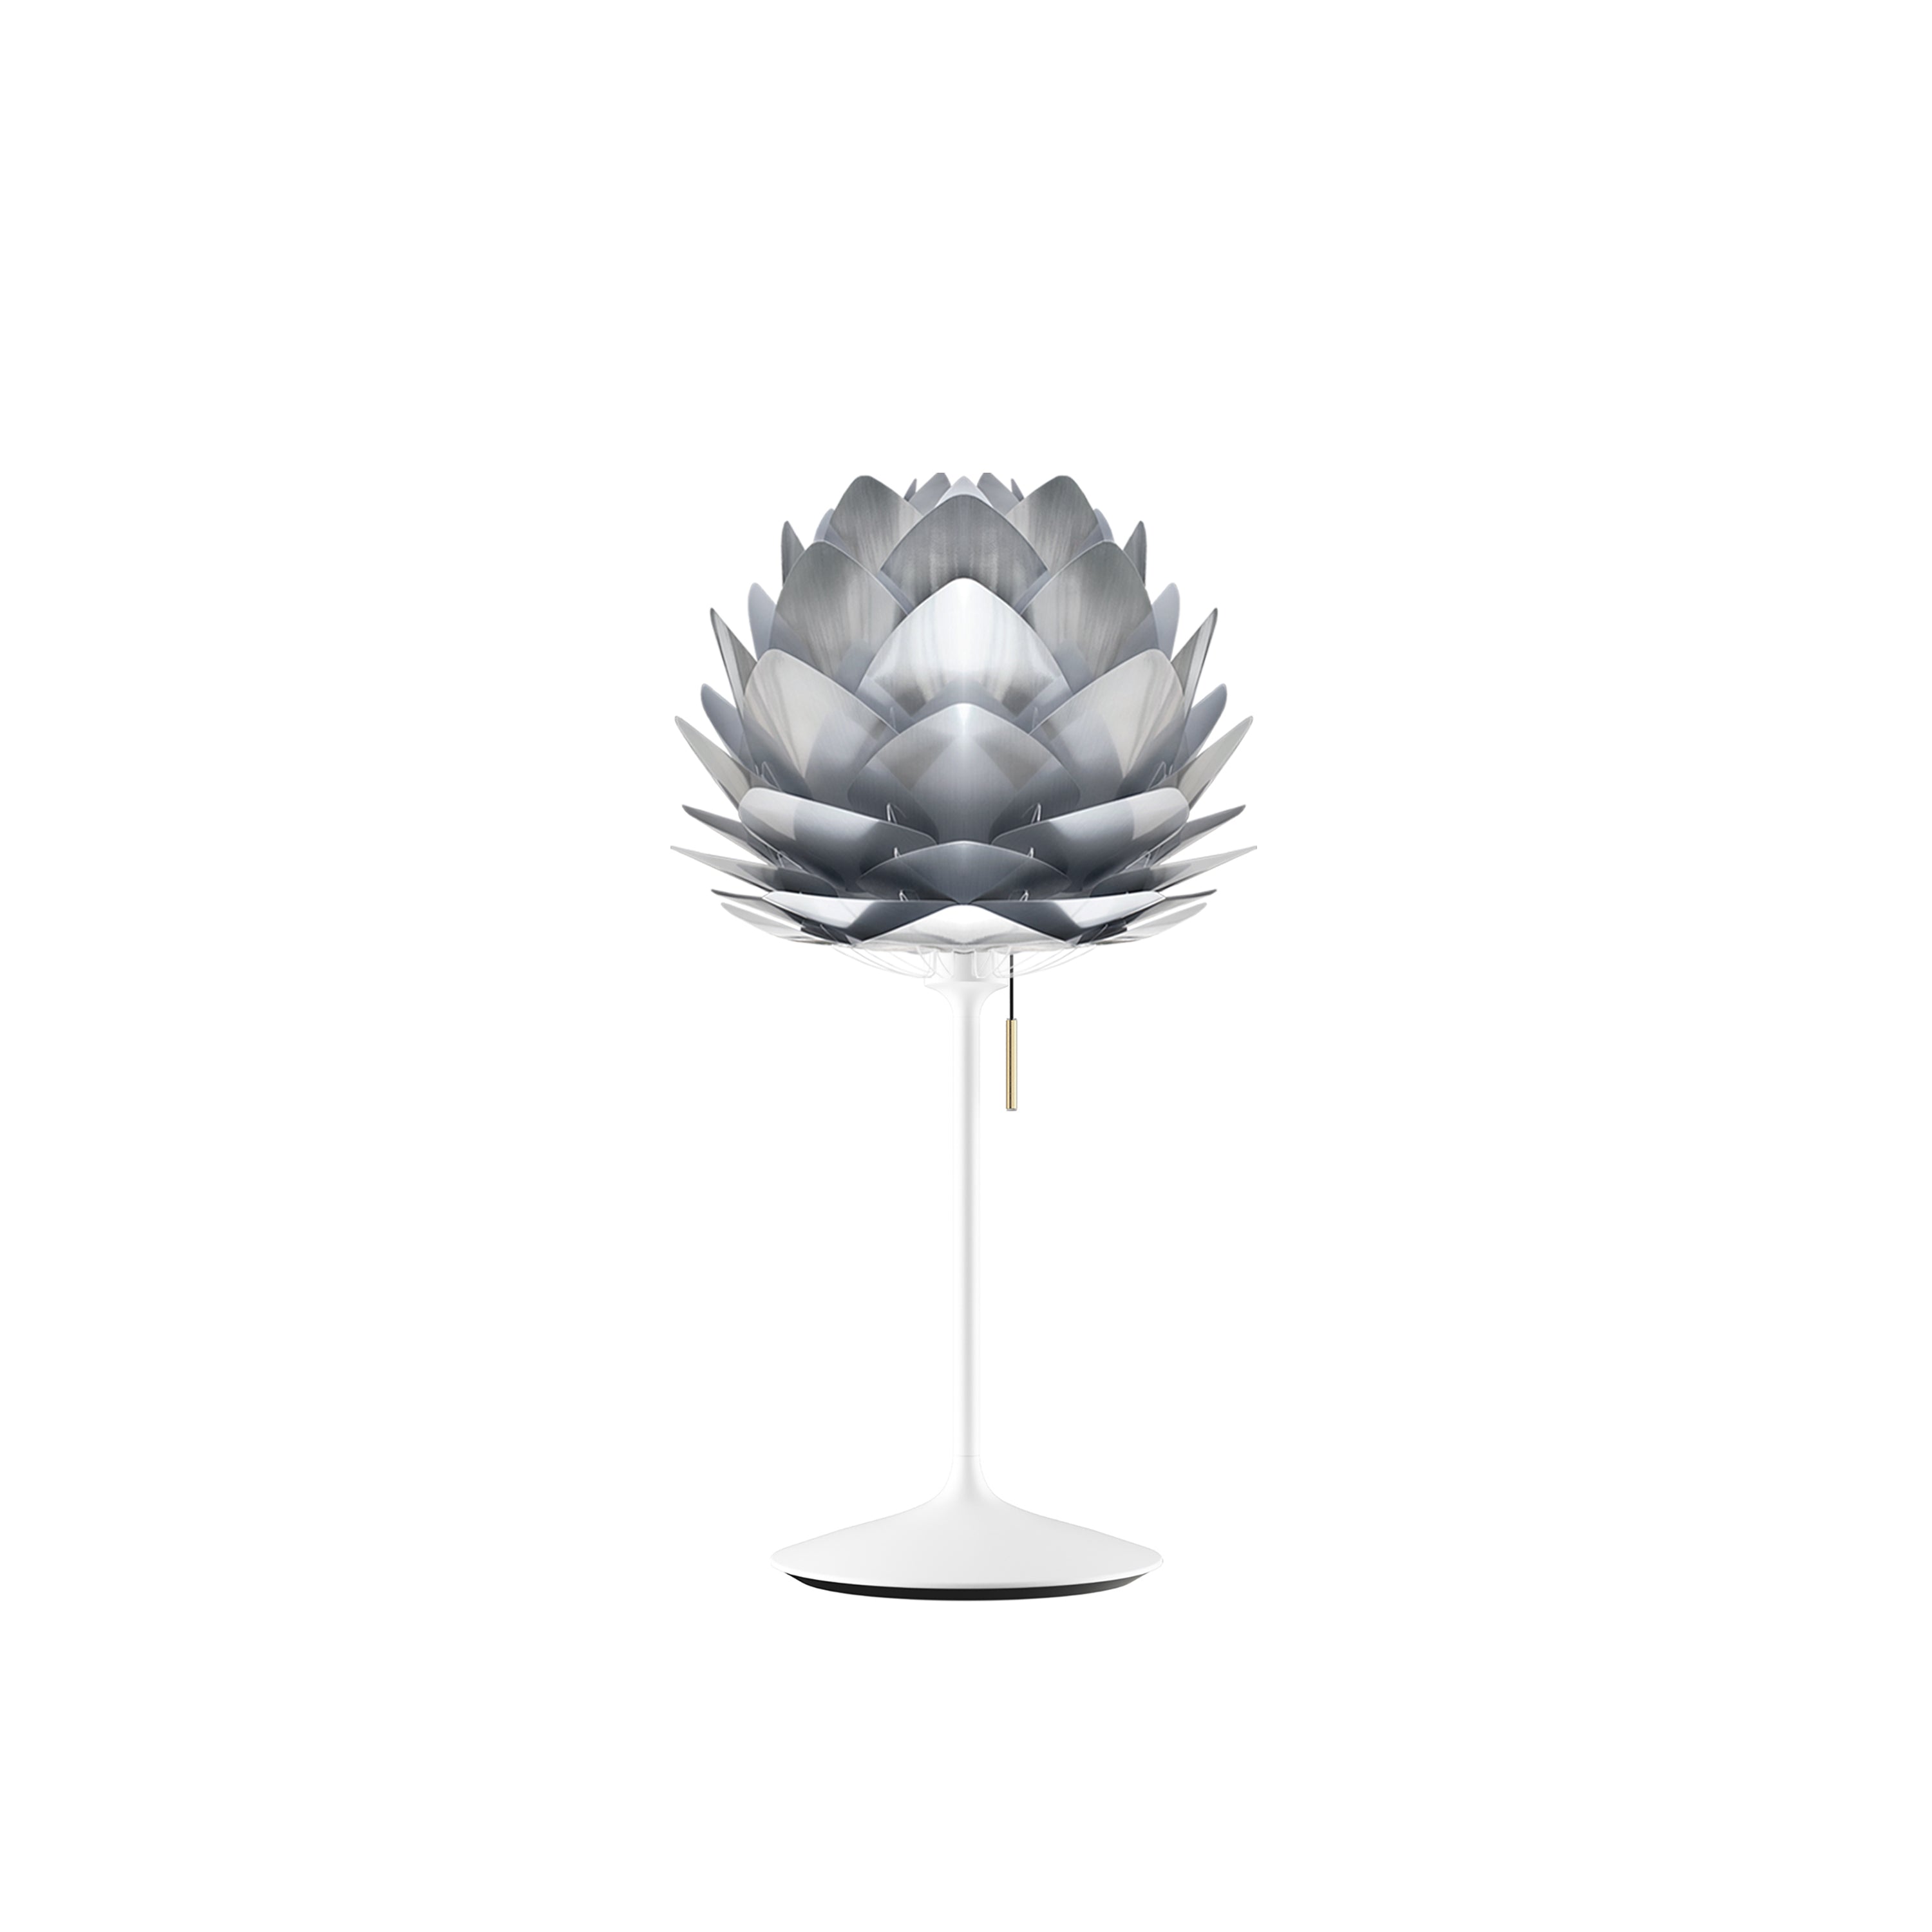 Silvia Champagne Table Lamp: Mini - 13.4